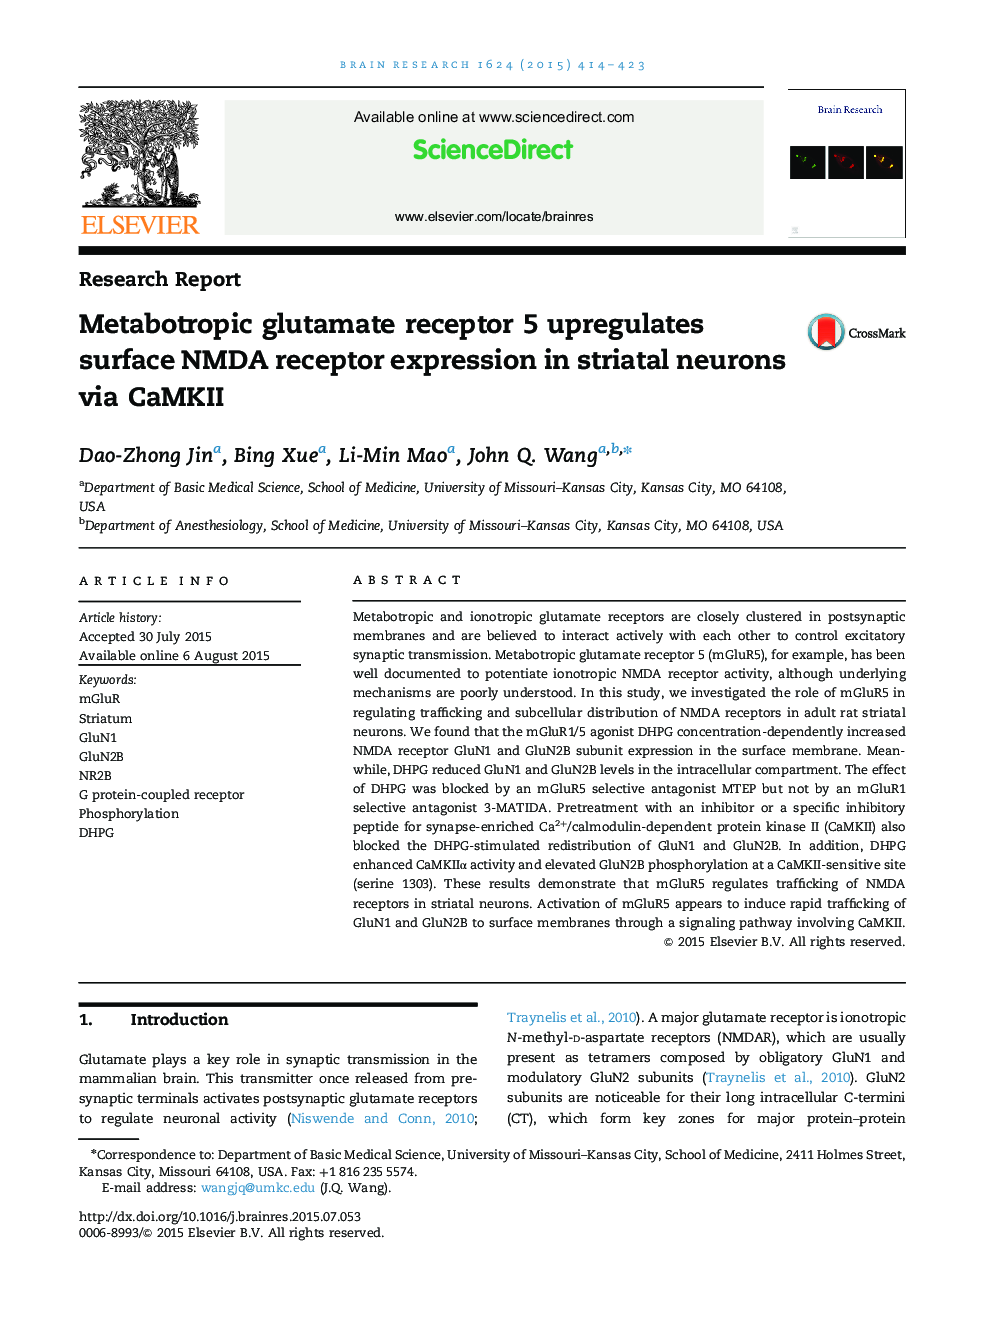 Research ReportMetabotropic glutamate receptor 5 upregulates surface NMDA receptor expression in striatal neurons via CaMKII